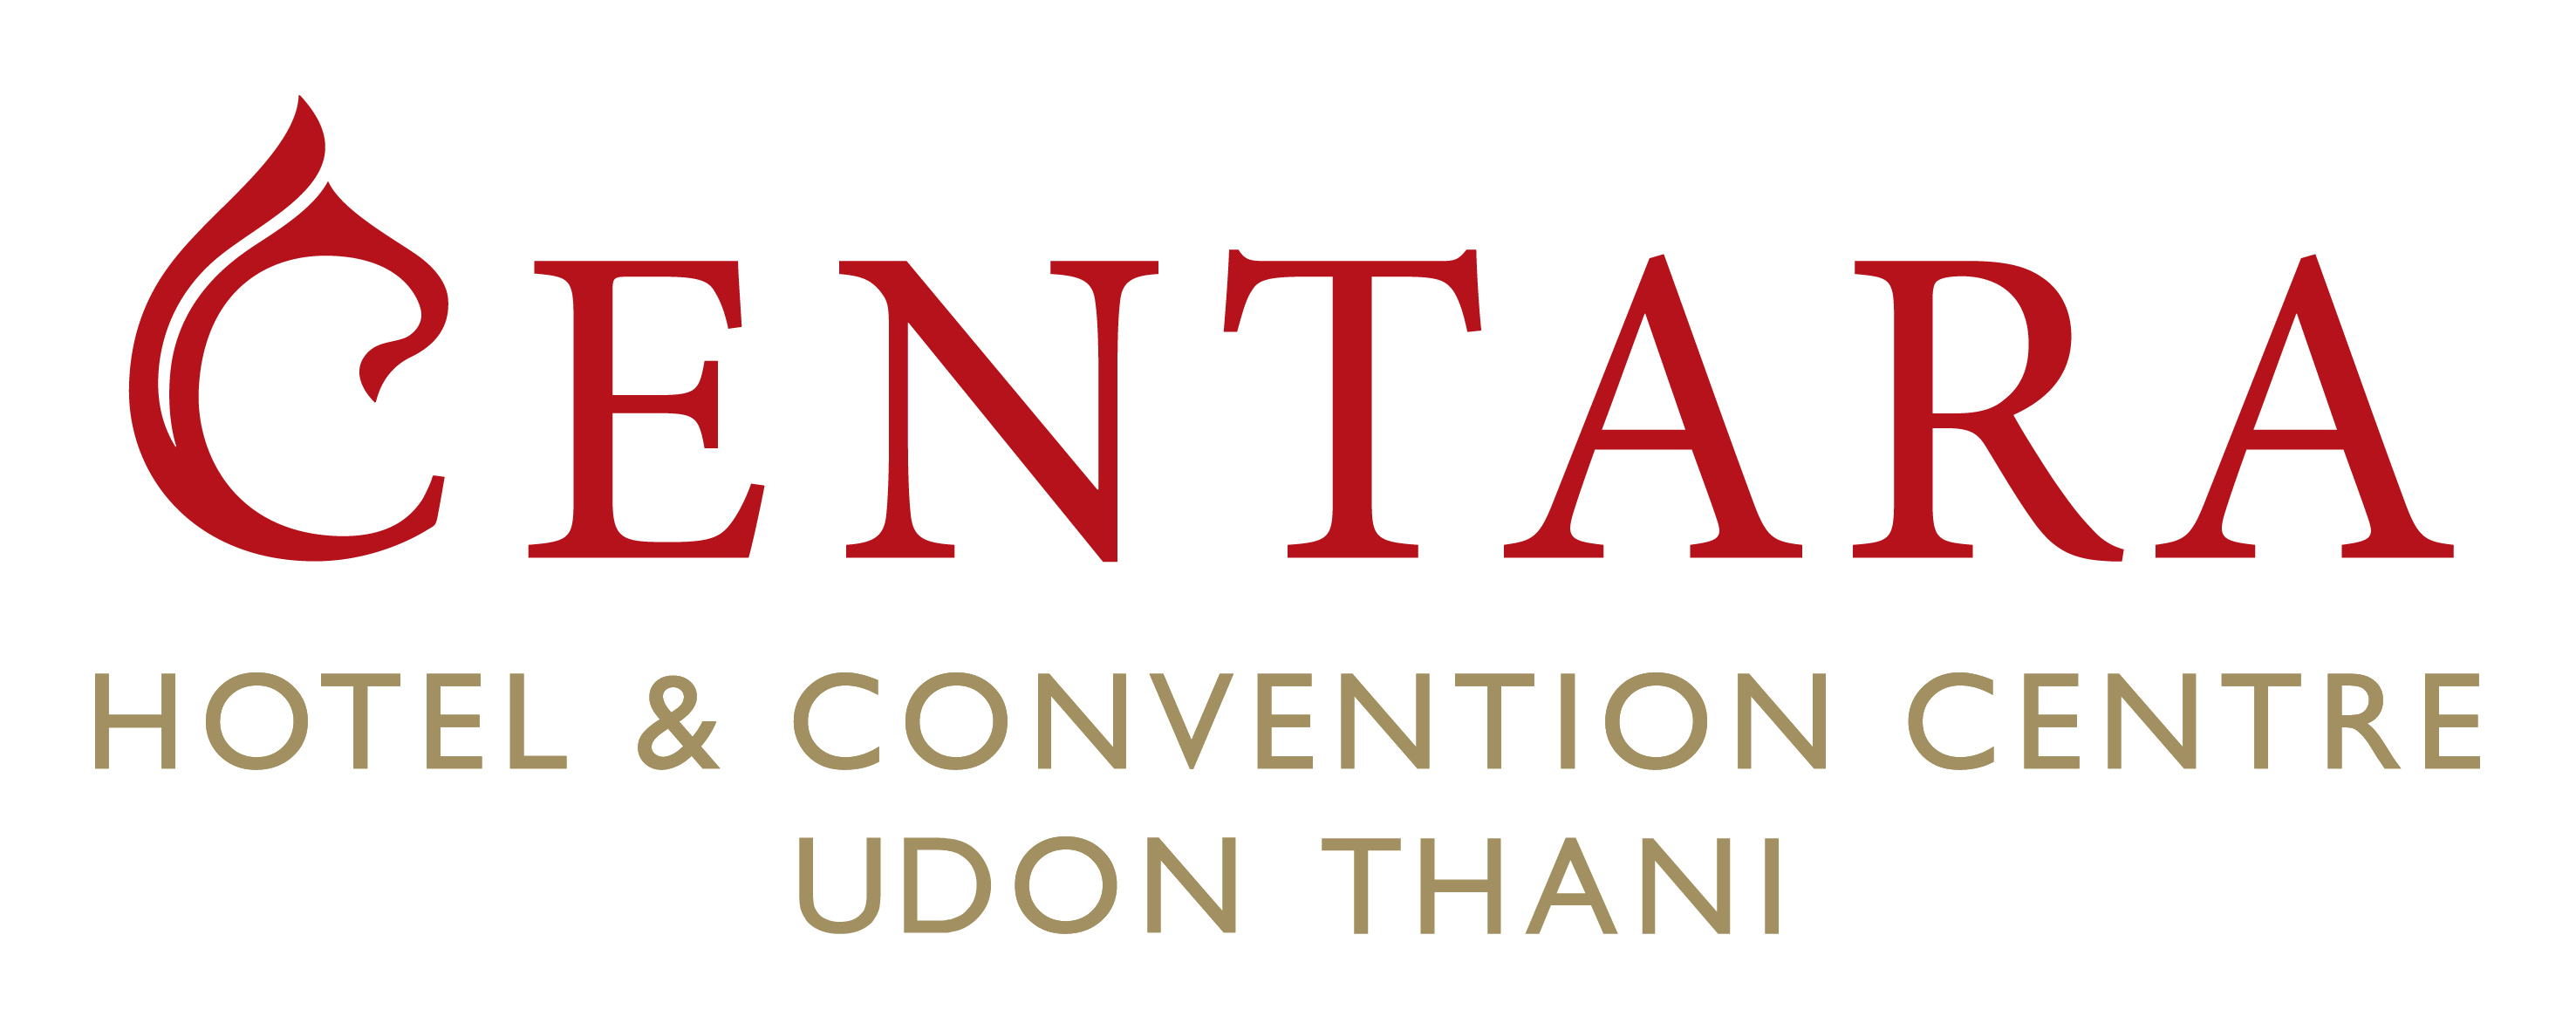 CENTARA HOTEL & CONVENTION CENTRE UDON THANI